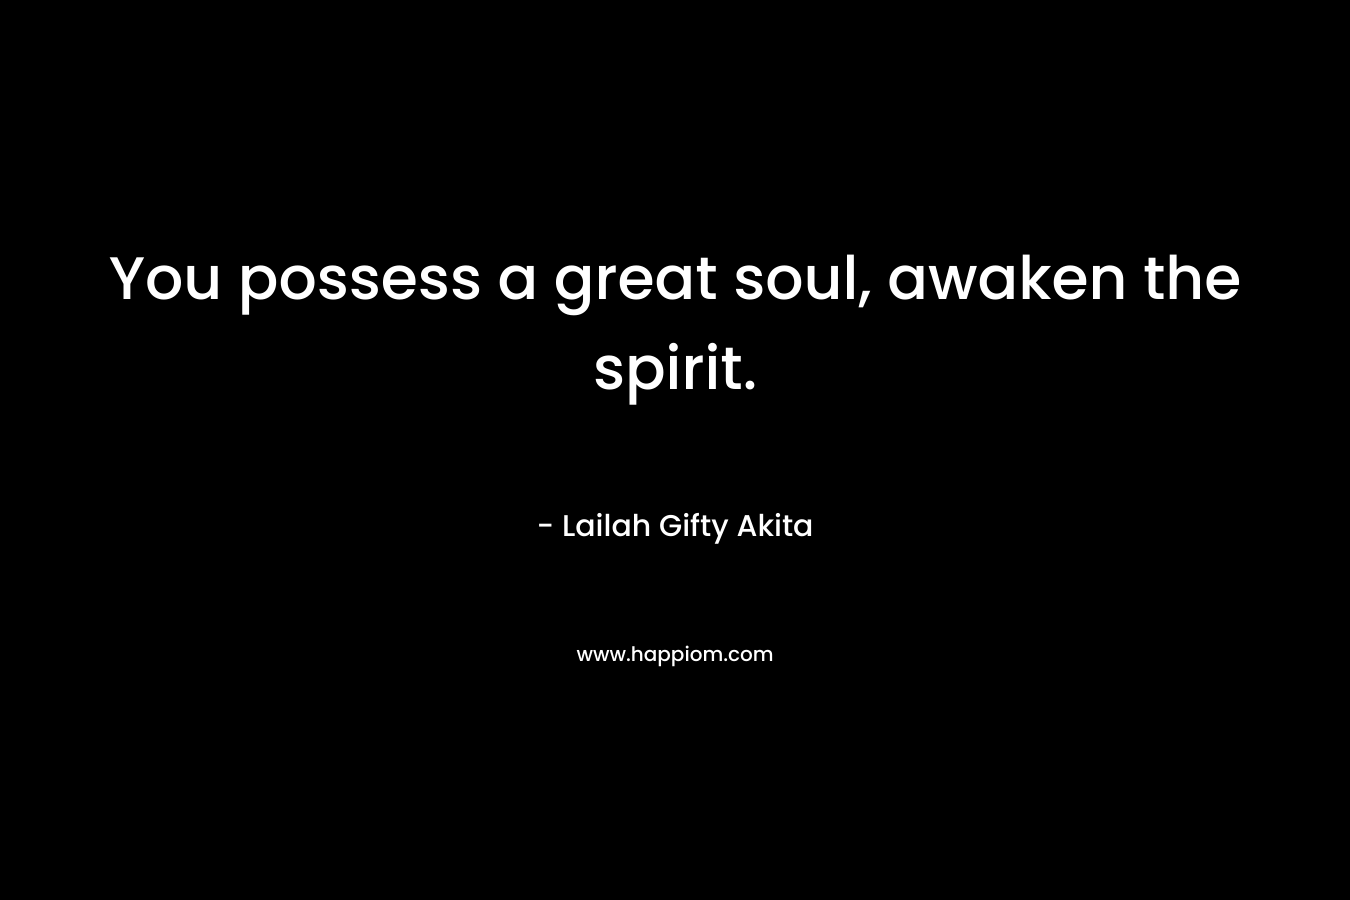 You possess a great soul, awaken the spirit.